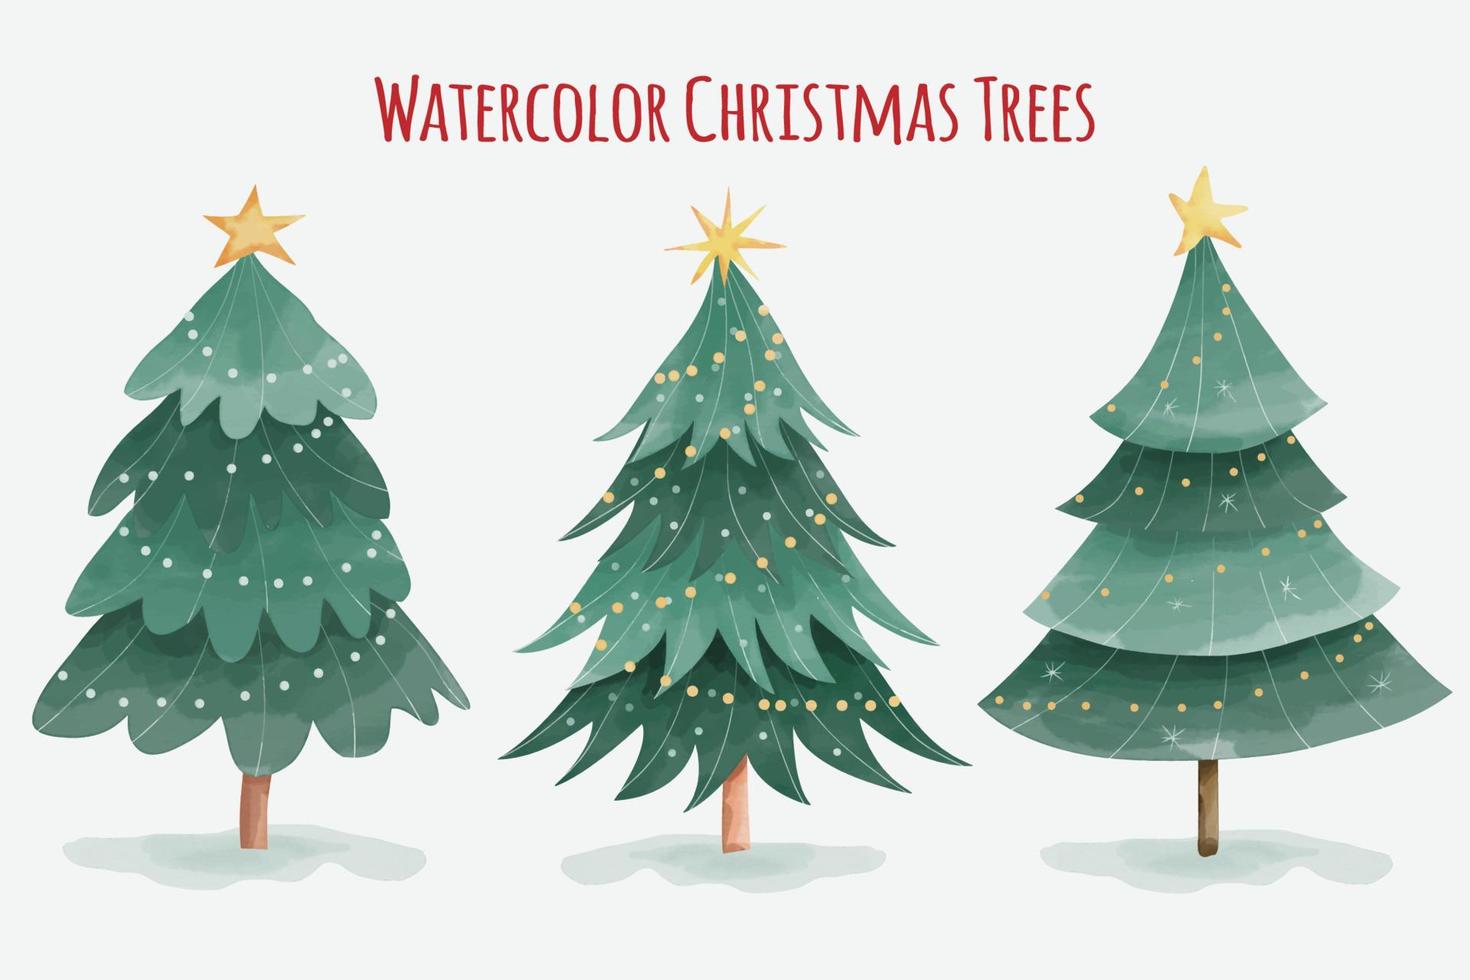 Watercolor Christmas Tree Collection vector